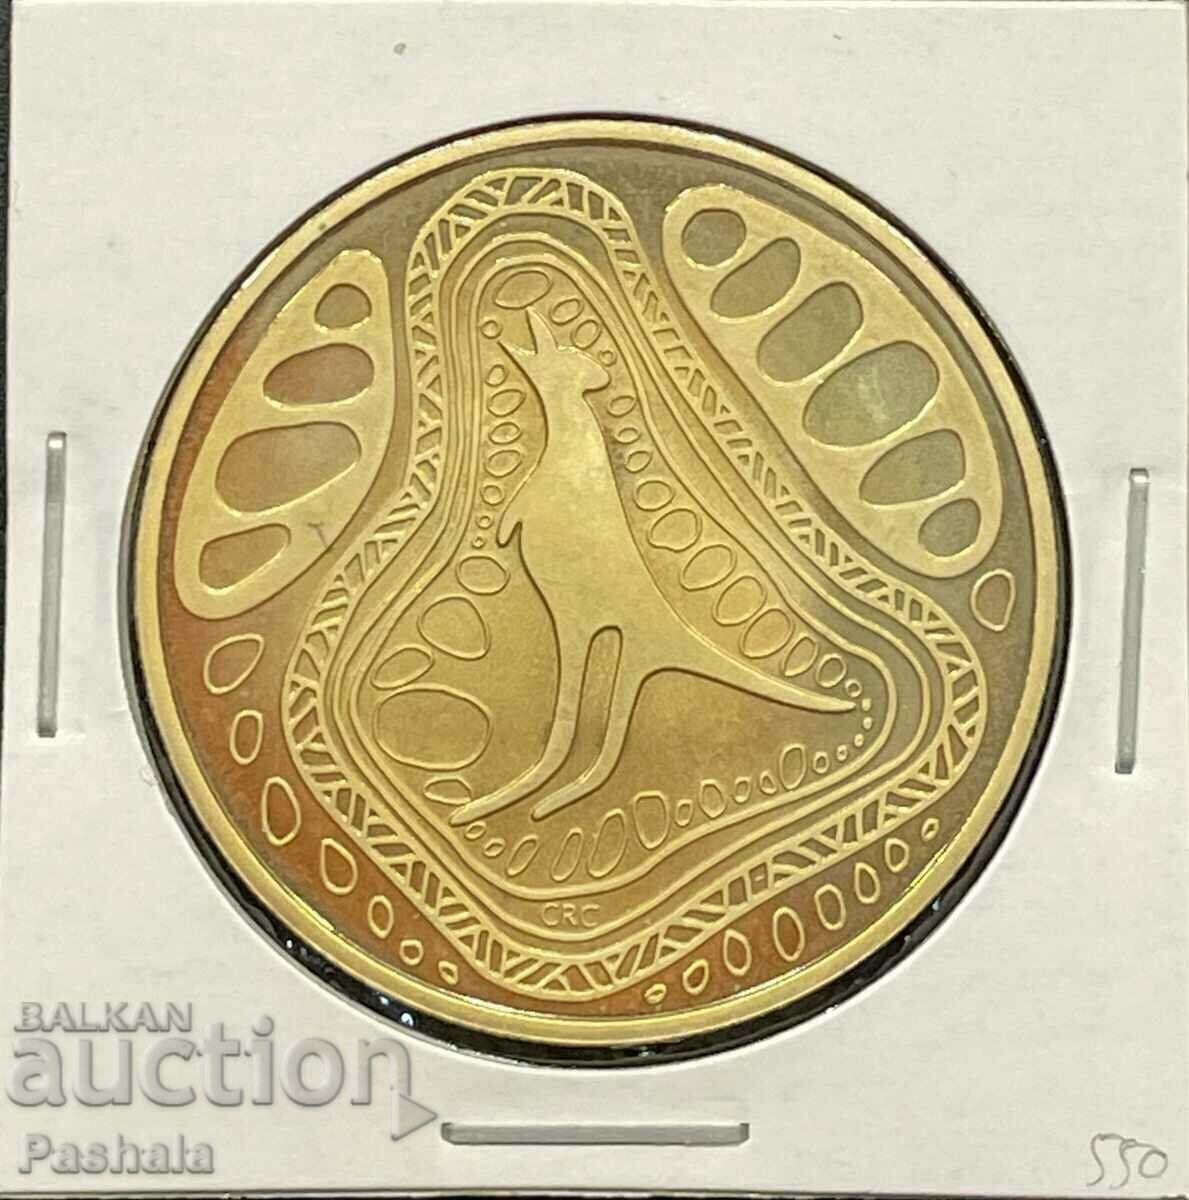 Australia 1 USD 2005